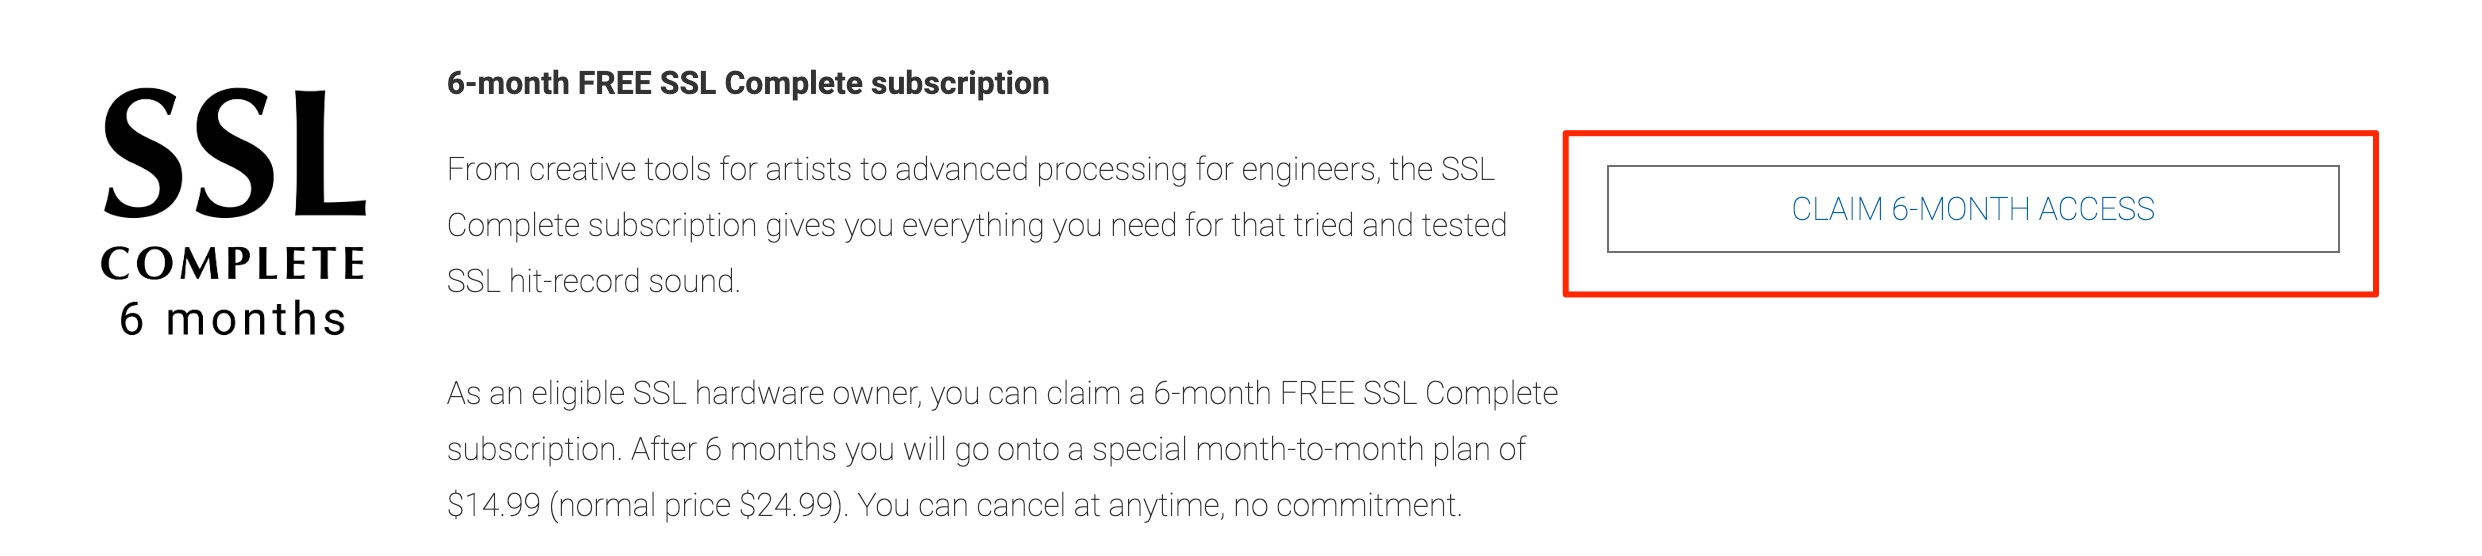 SSL_COMPLETE_6months_free